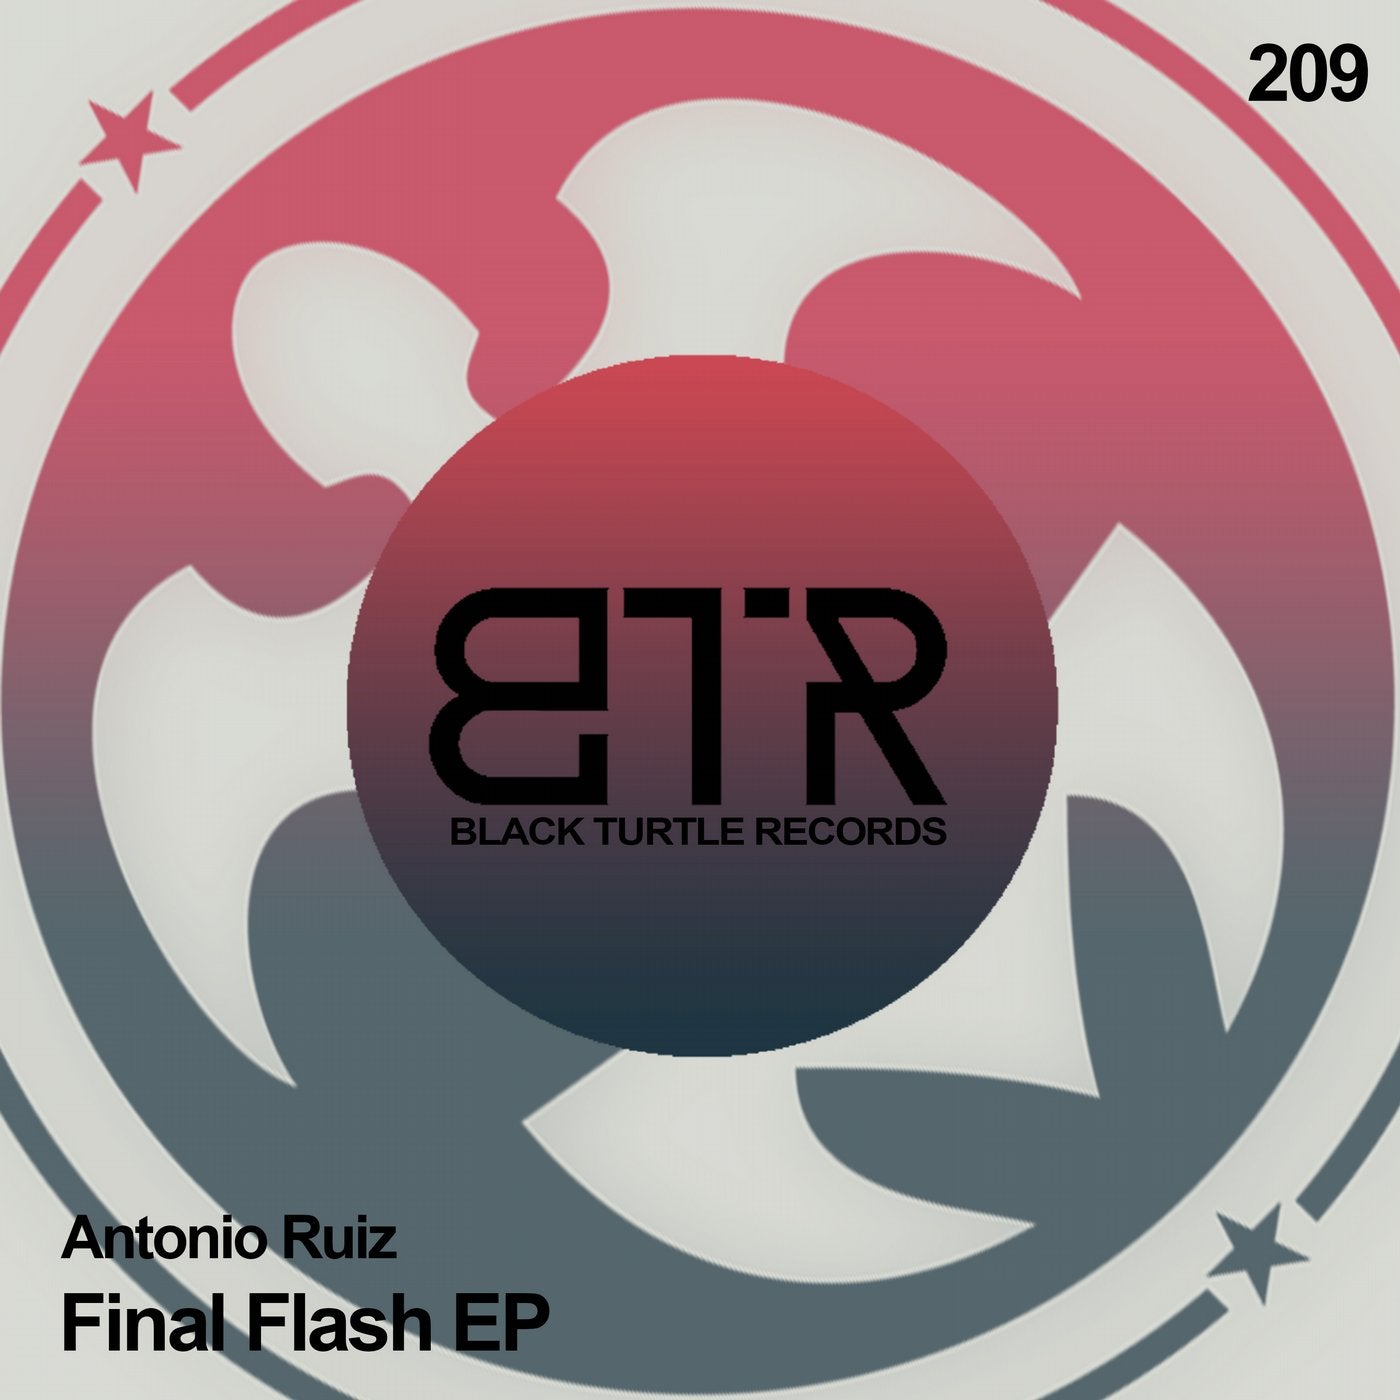 Final Flash EP